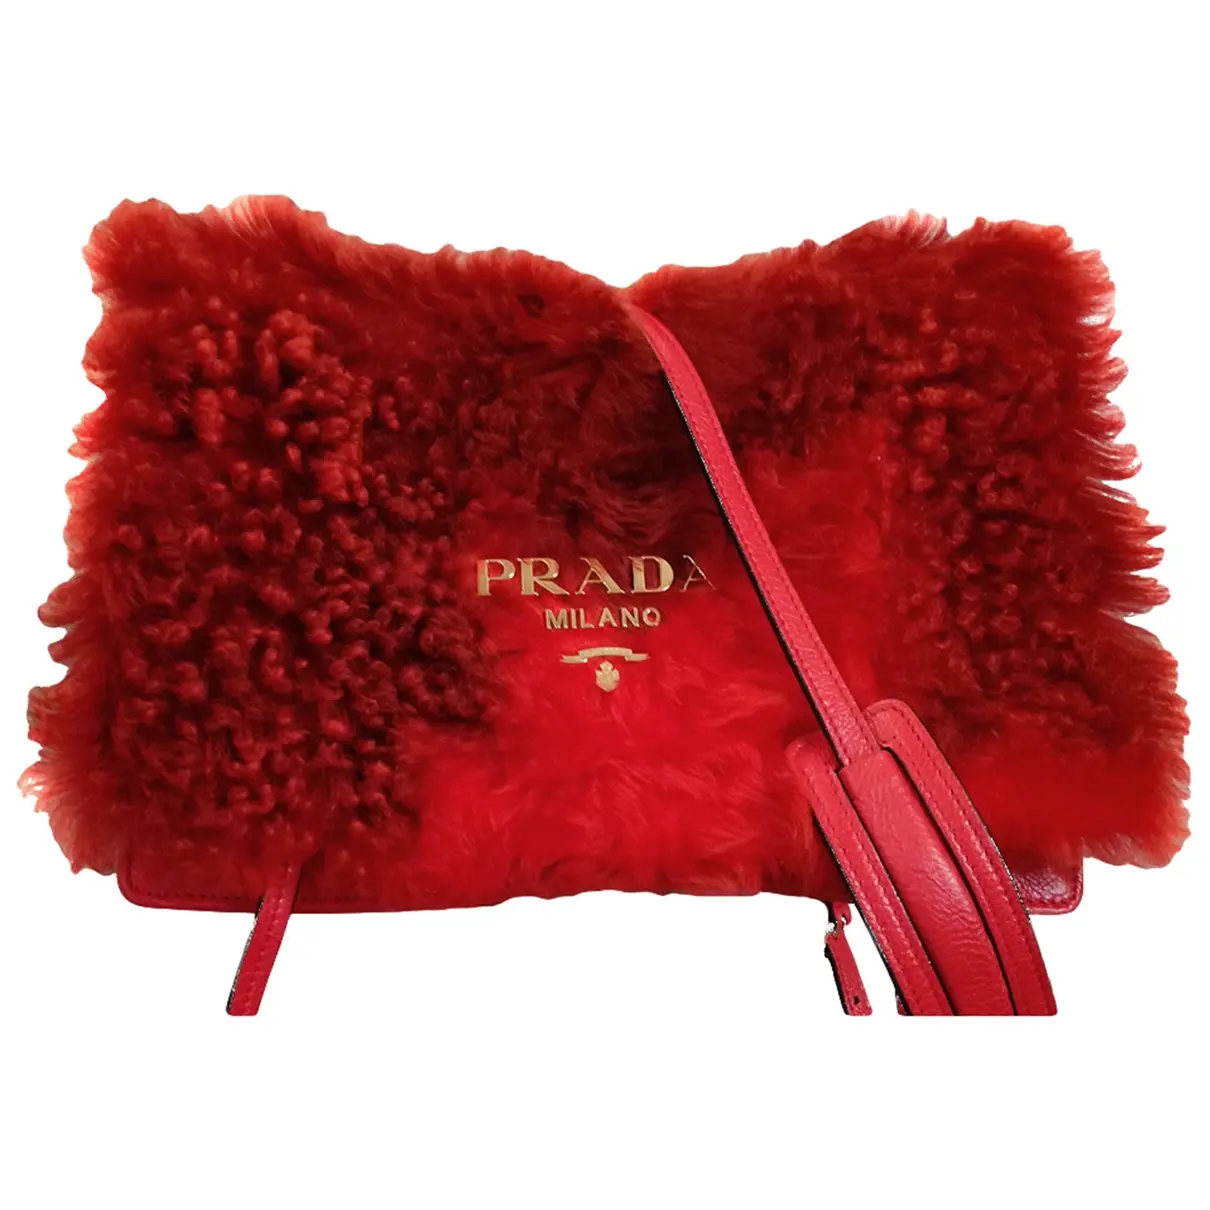 Etiquette shearling crossbody bag Prada